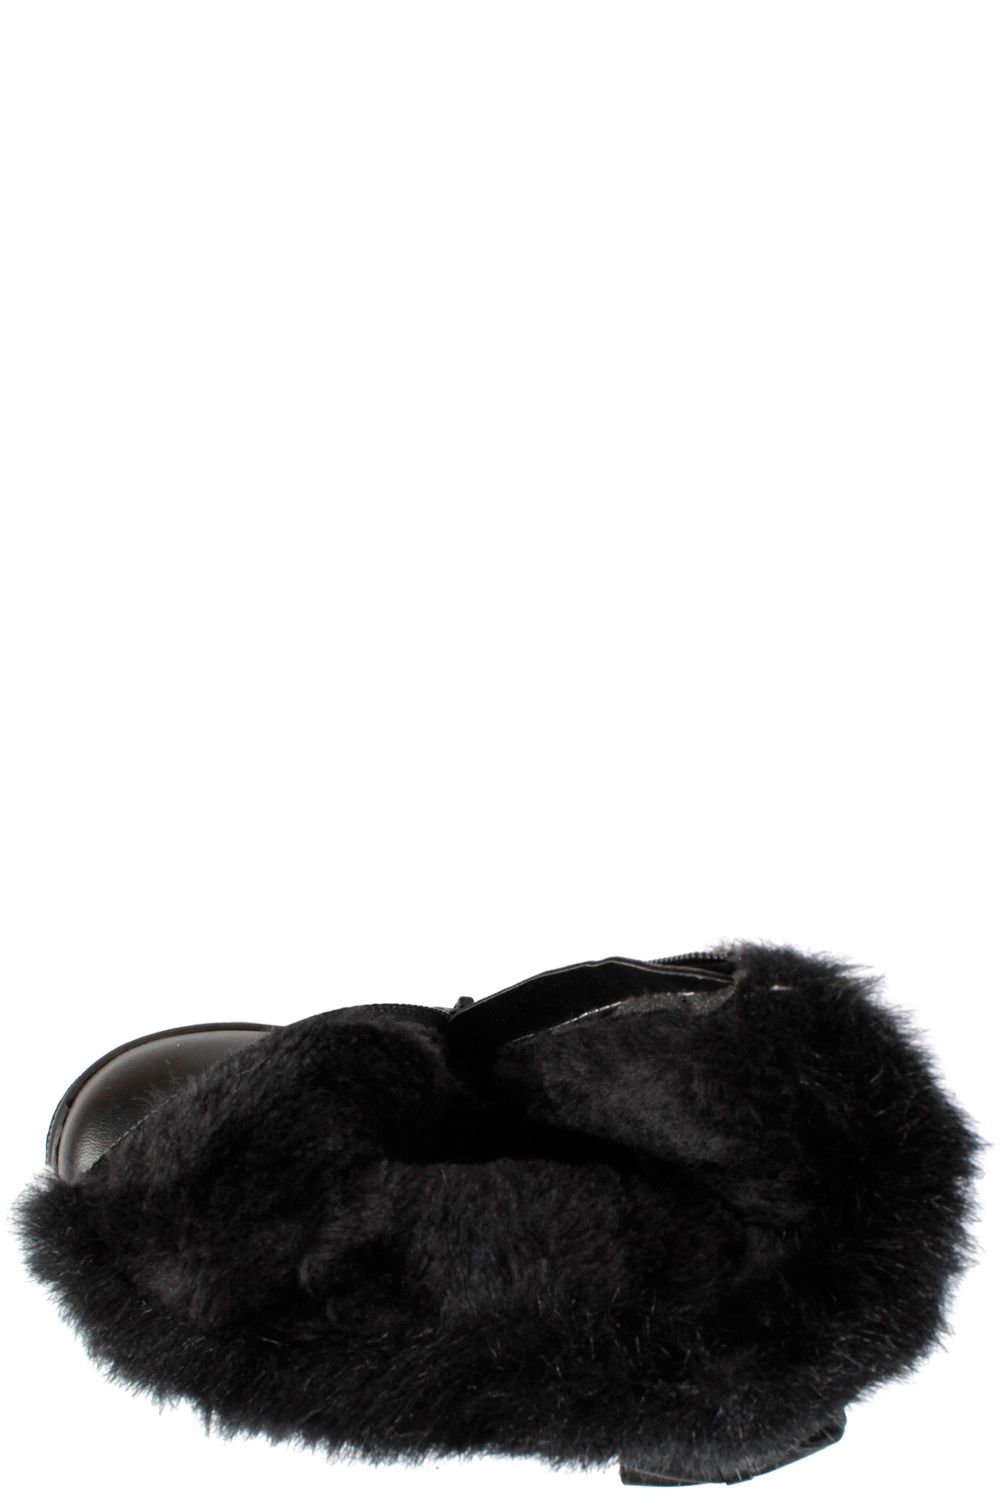 Сапоги Vicco, размер 25, цвет черный 219.P.057_cB2 - фото 4